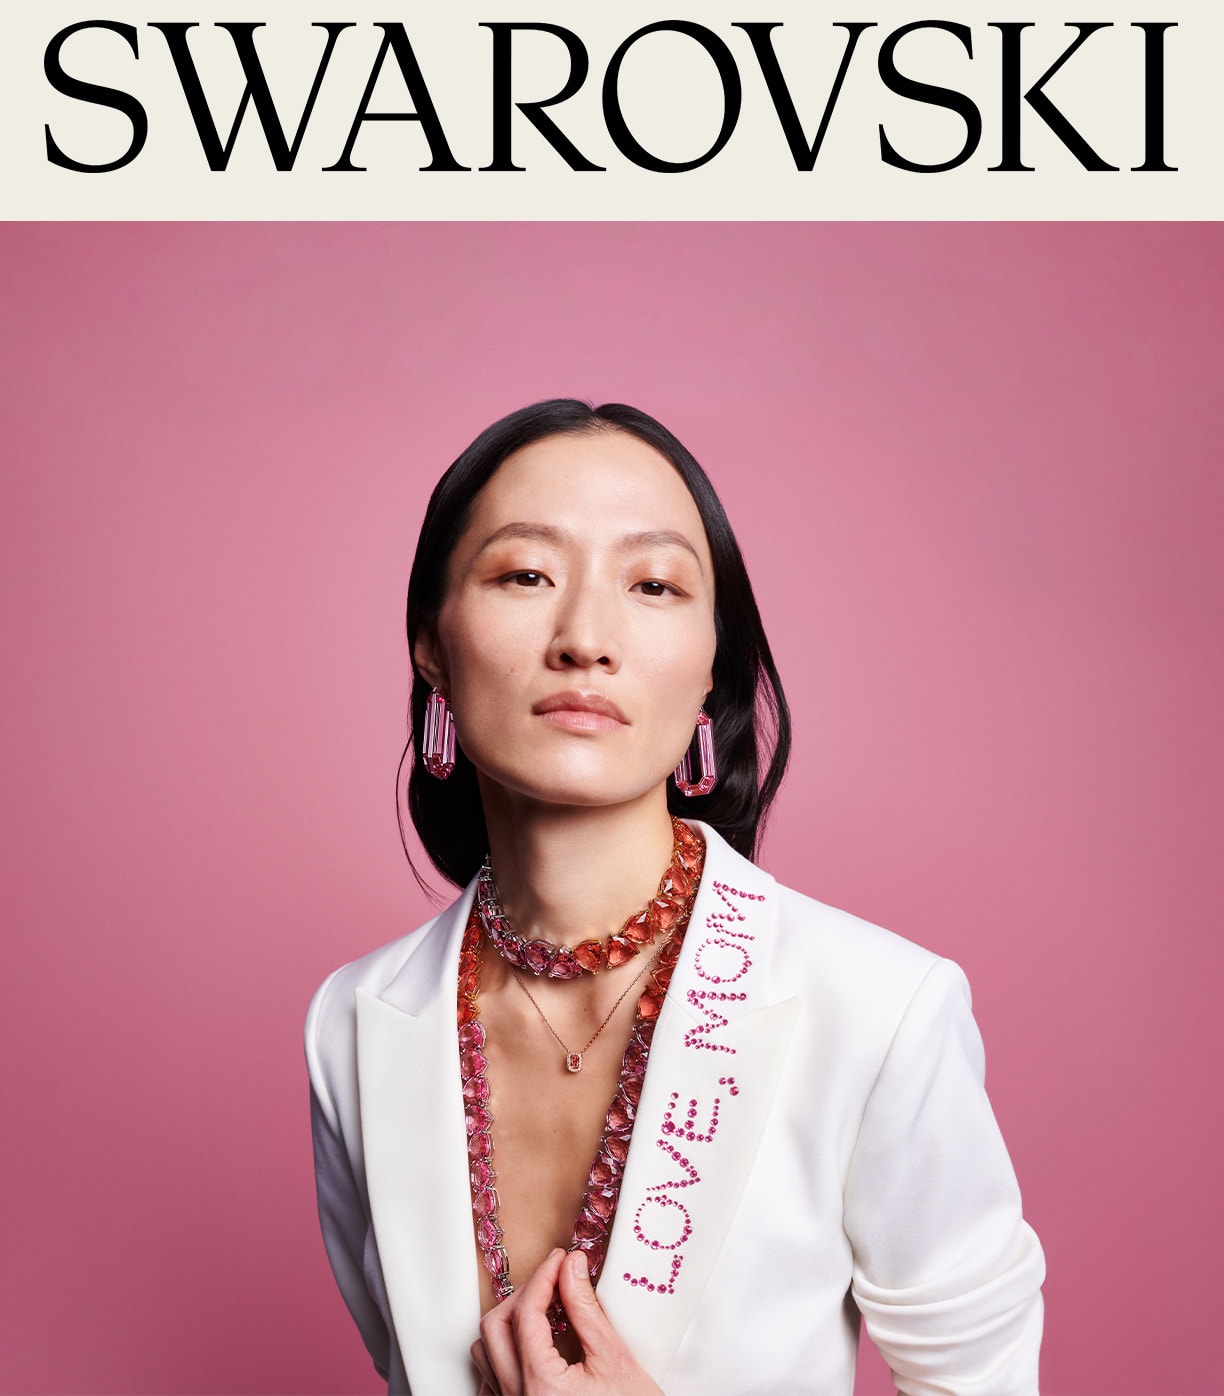 Swarovski necklaces